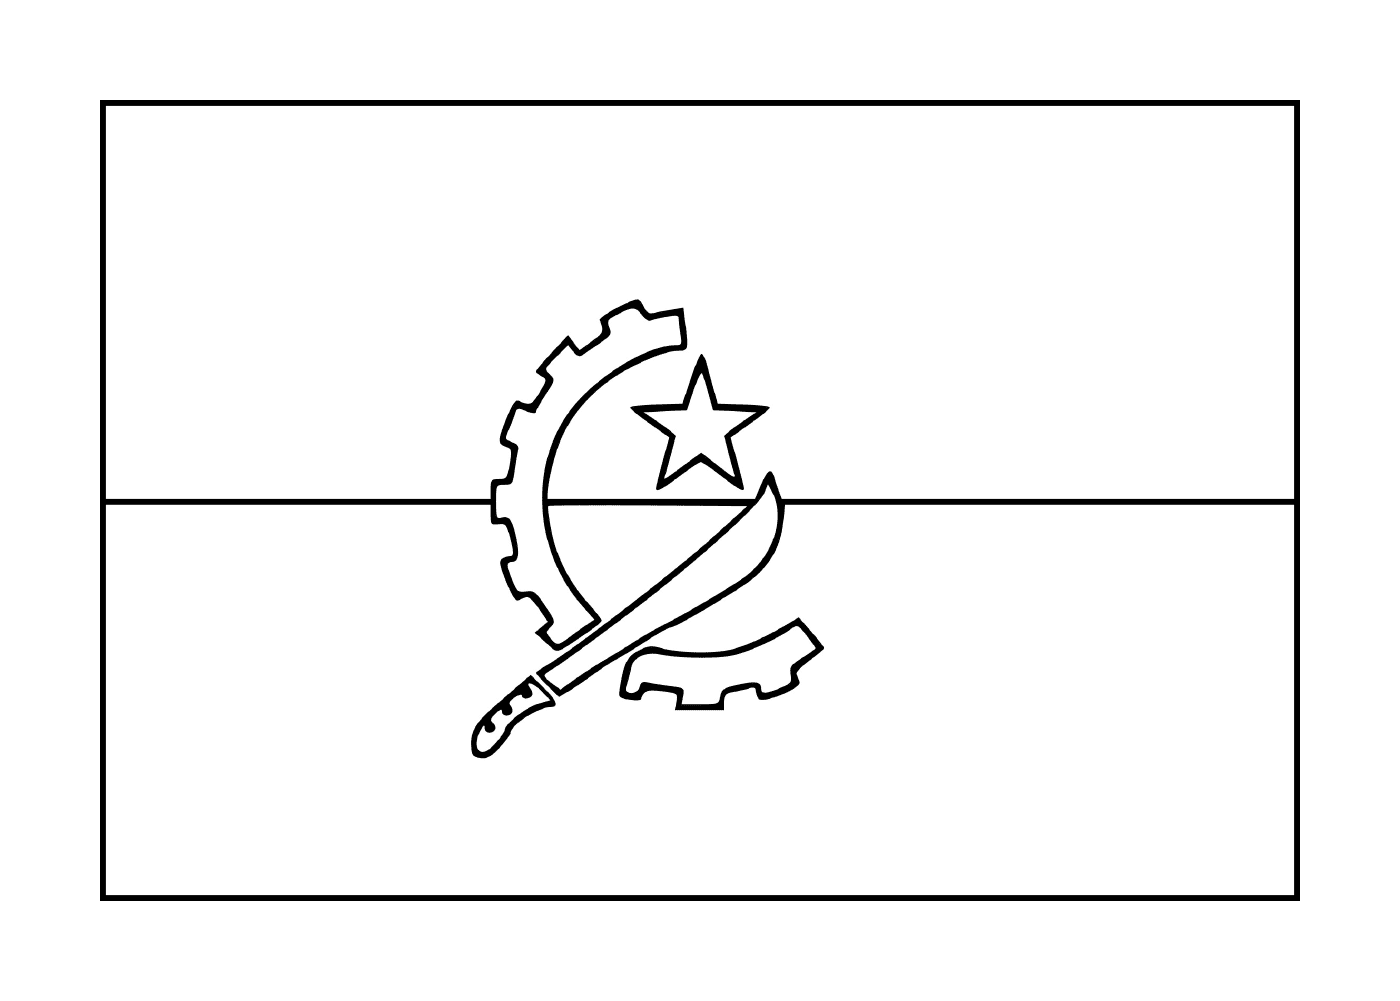  Bandeira de Angola 